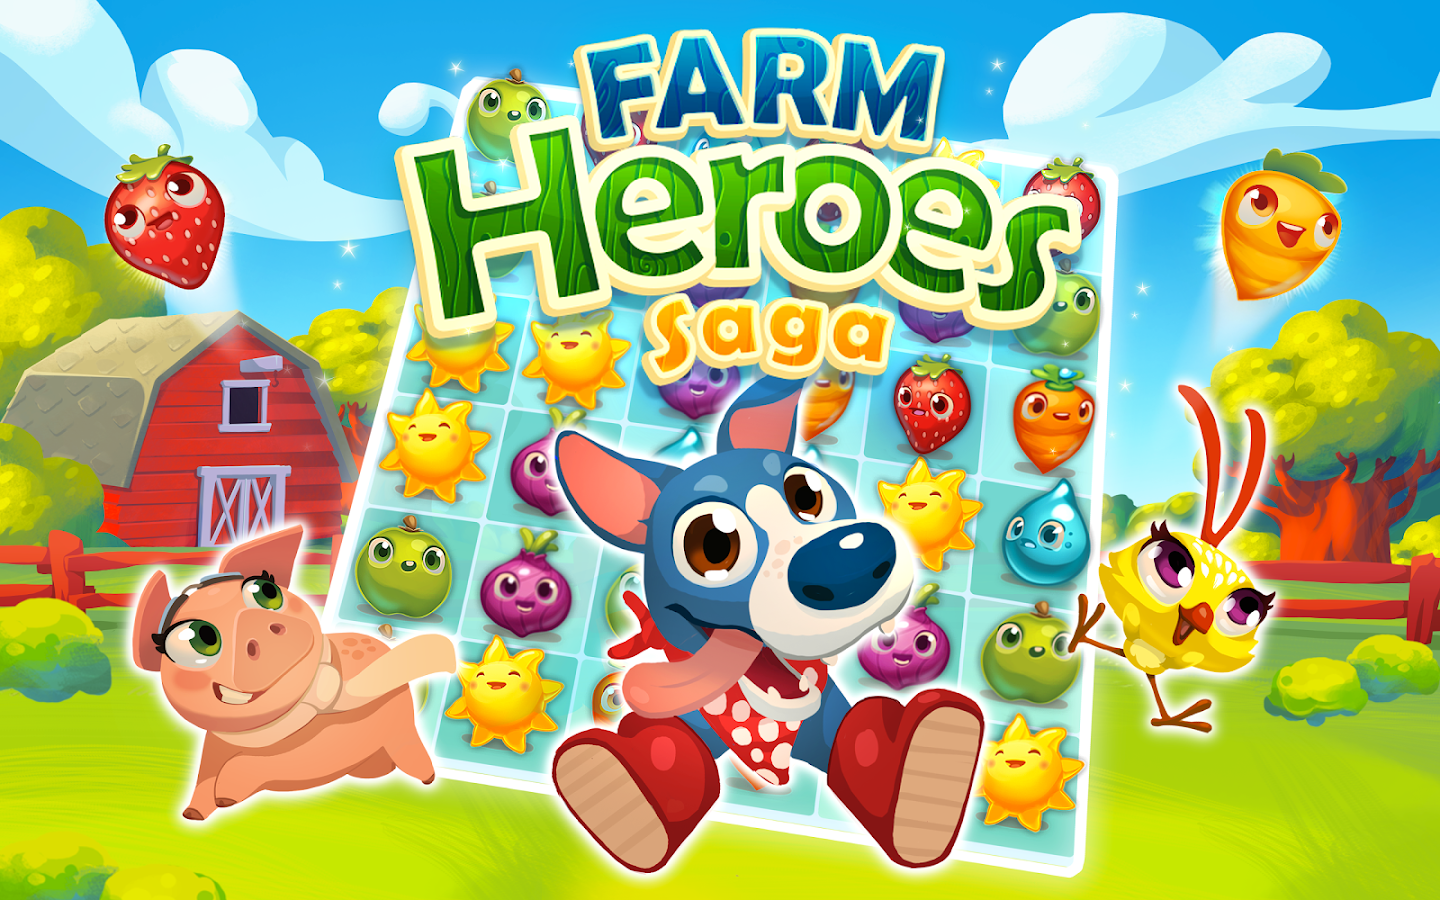 Farm Heroes Saga IpftL-DqhdIaoWp8lElPov4TdXpBDwhZdGd0H-8SDDUIv9kf_d5zC2pUuHuBayxCcUI=h900-rw